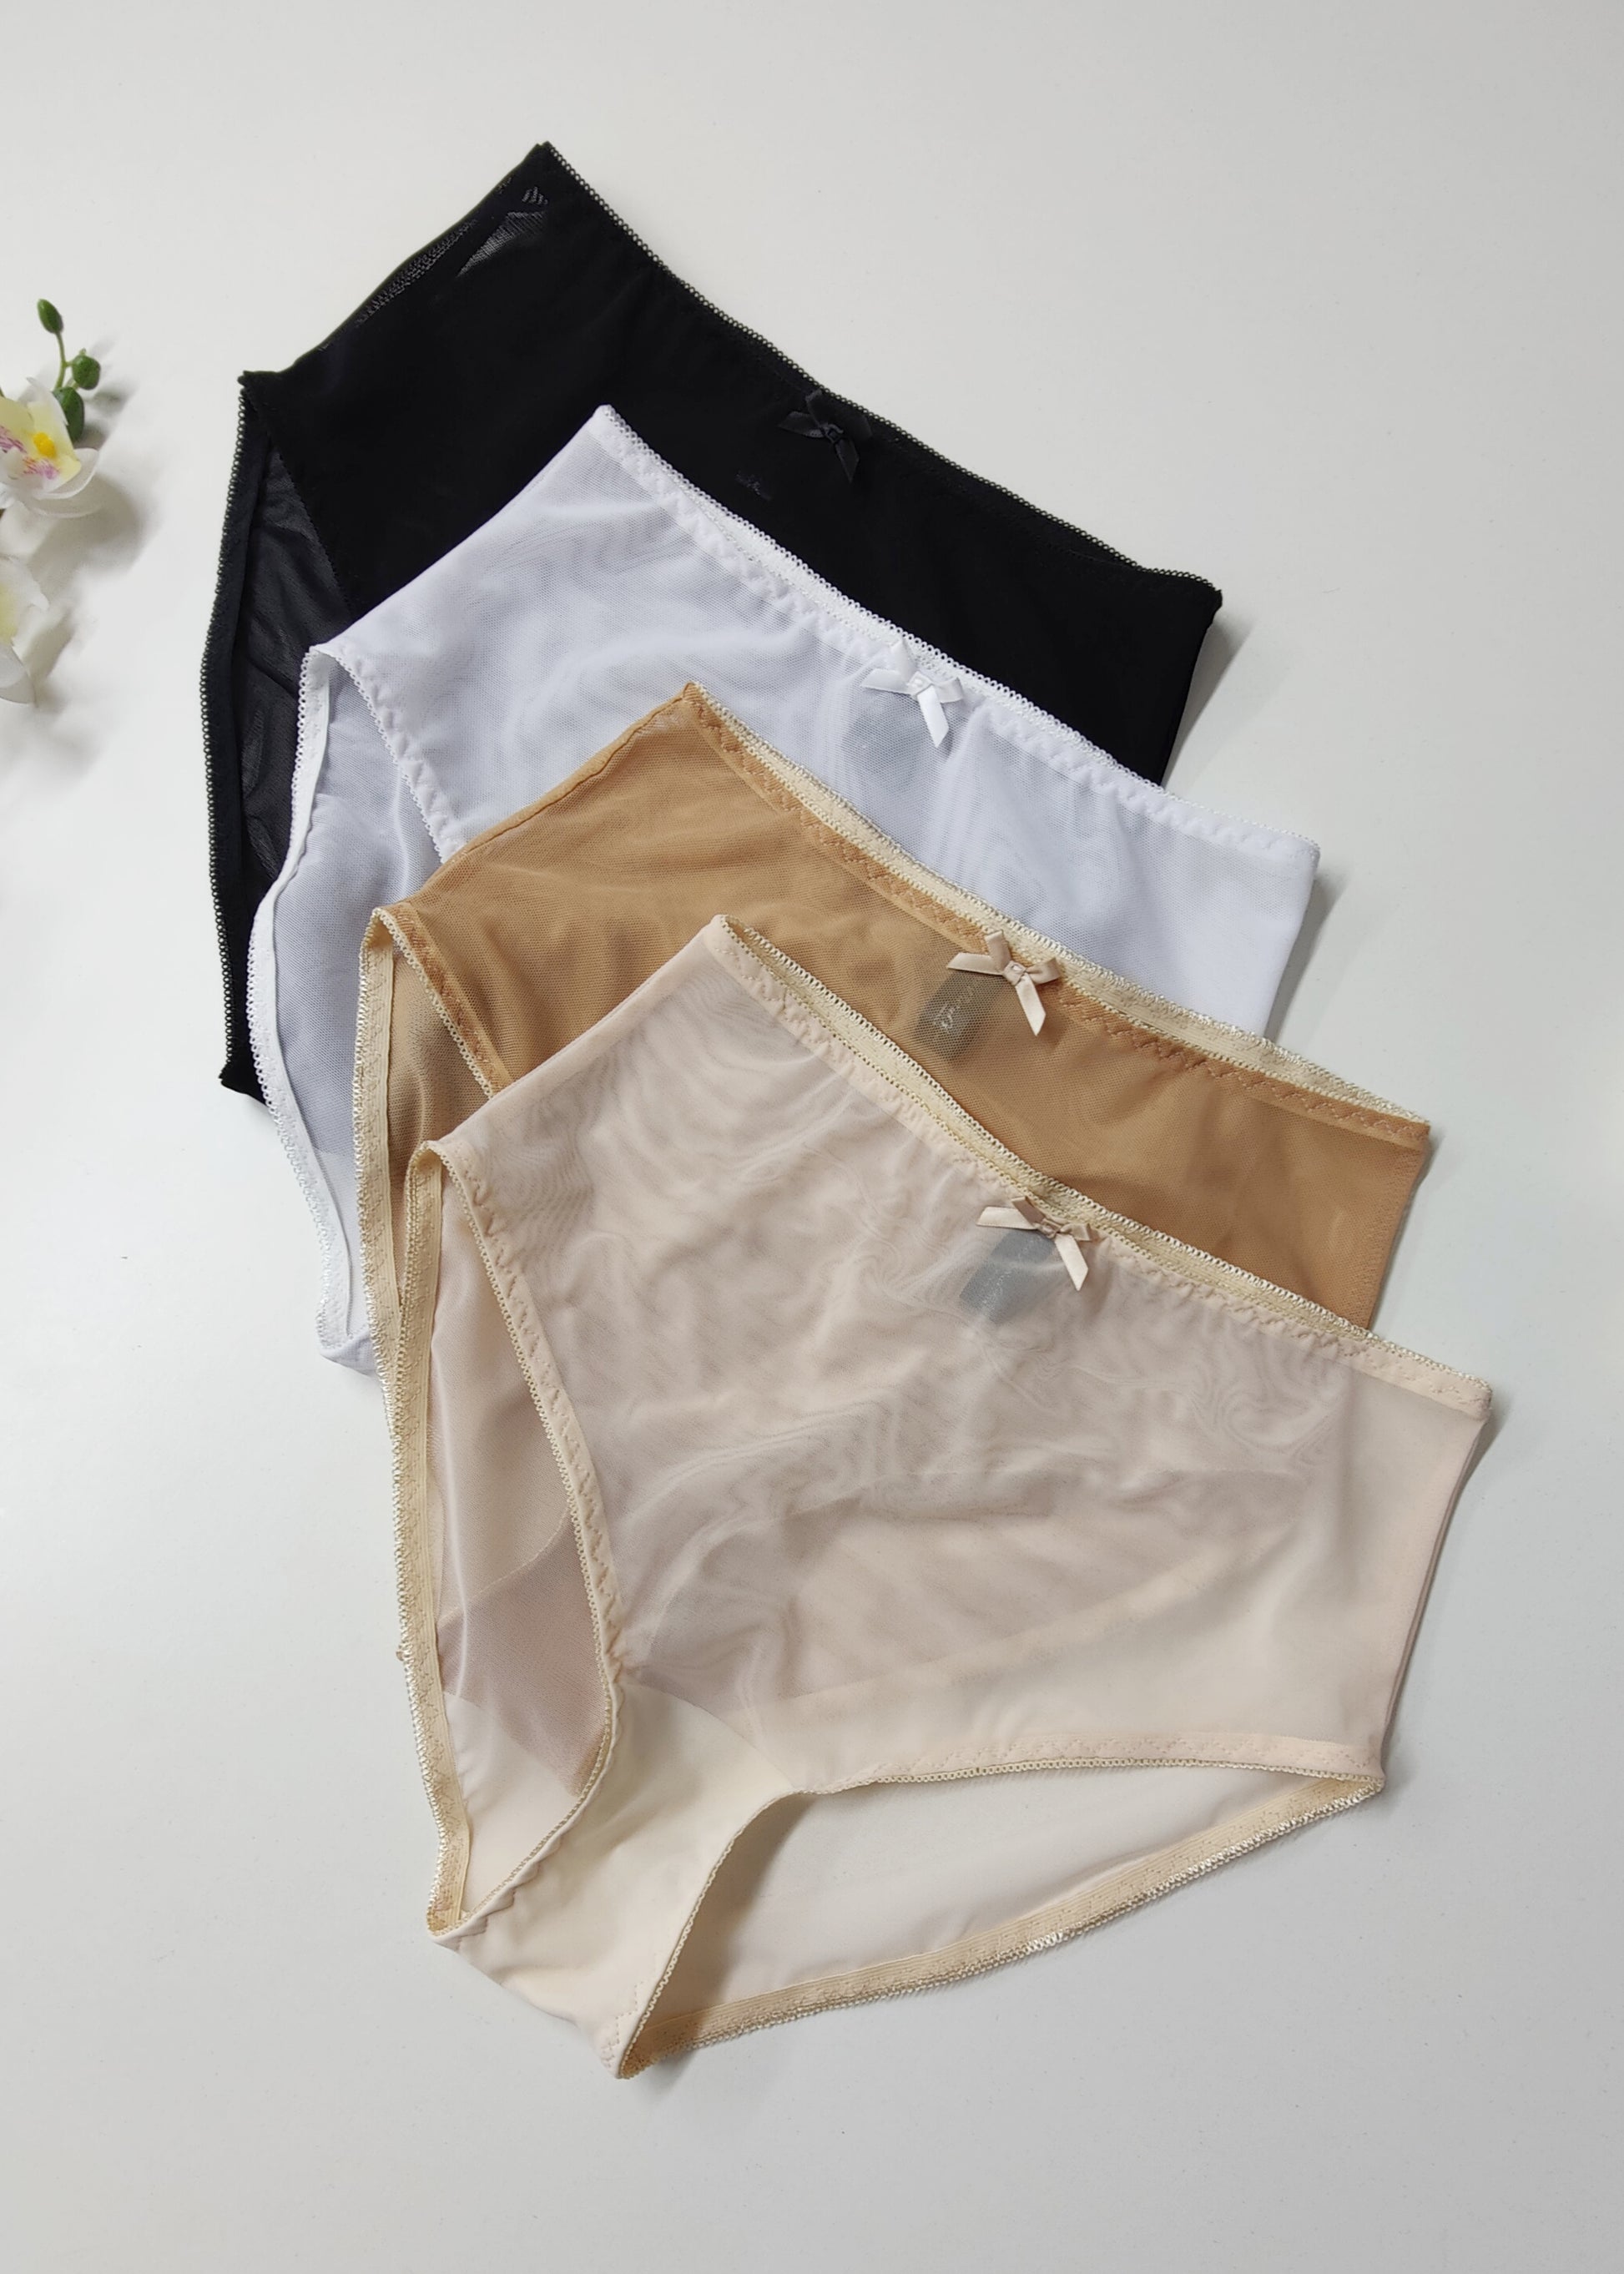 Ecru high waist semi-control panty, Women's panties